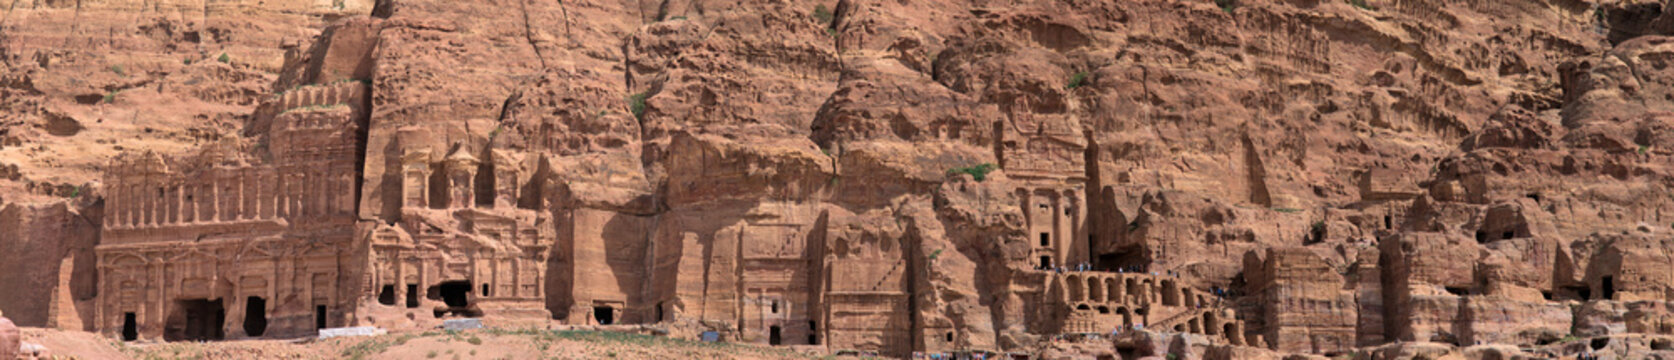 High resolution panorama of the rock city of Petra, Wadi Musa, Jordan, composed of several photos,